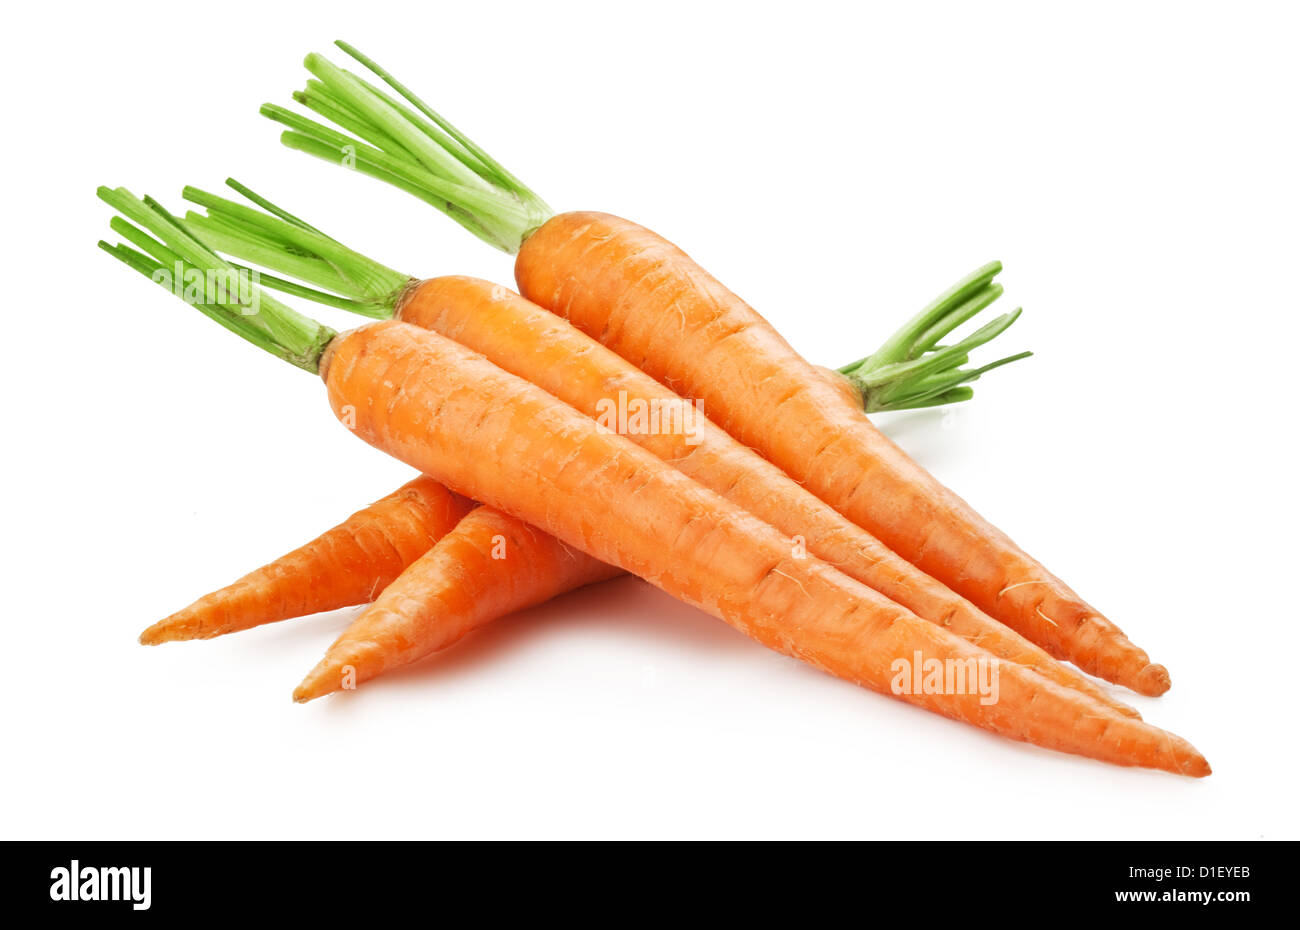 fresh carrots isolated on white background Stock Photo